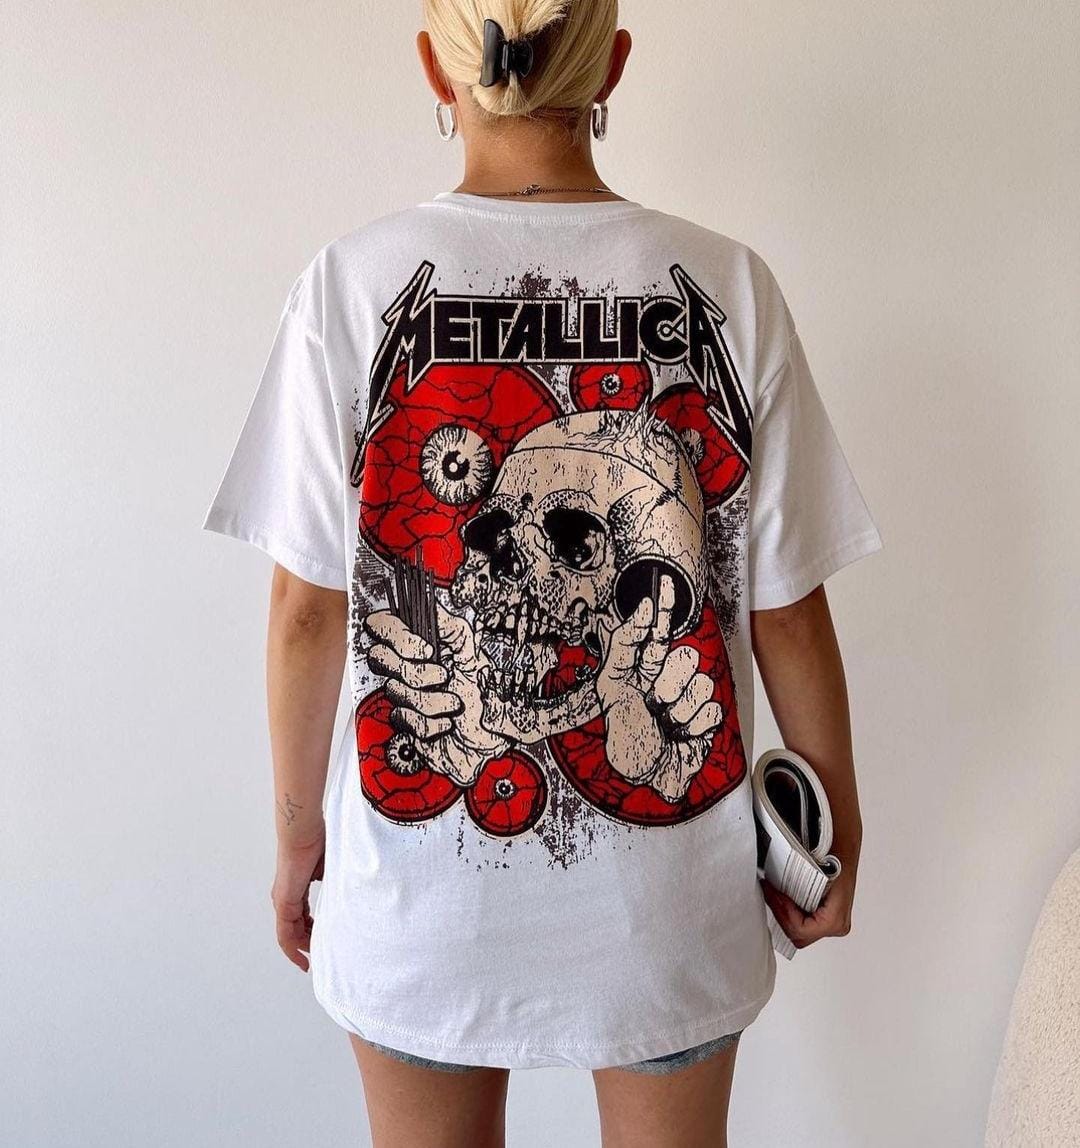 Metallica women's oversized tshirt